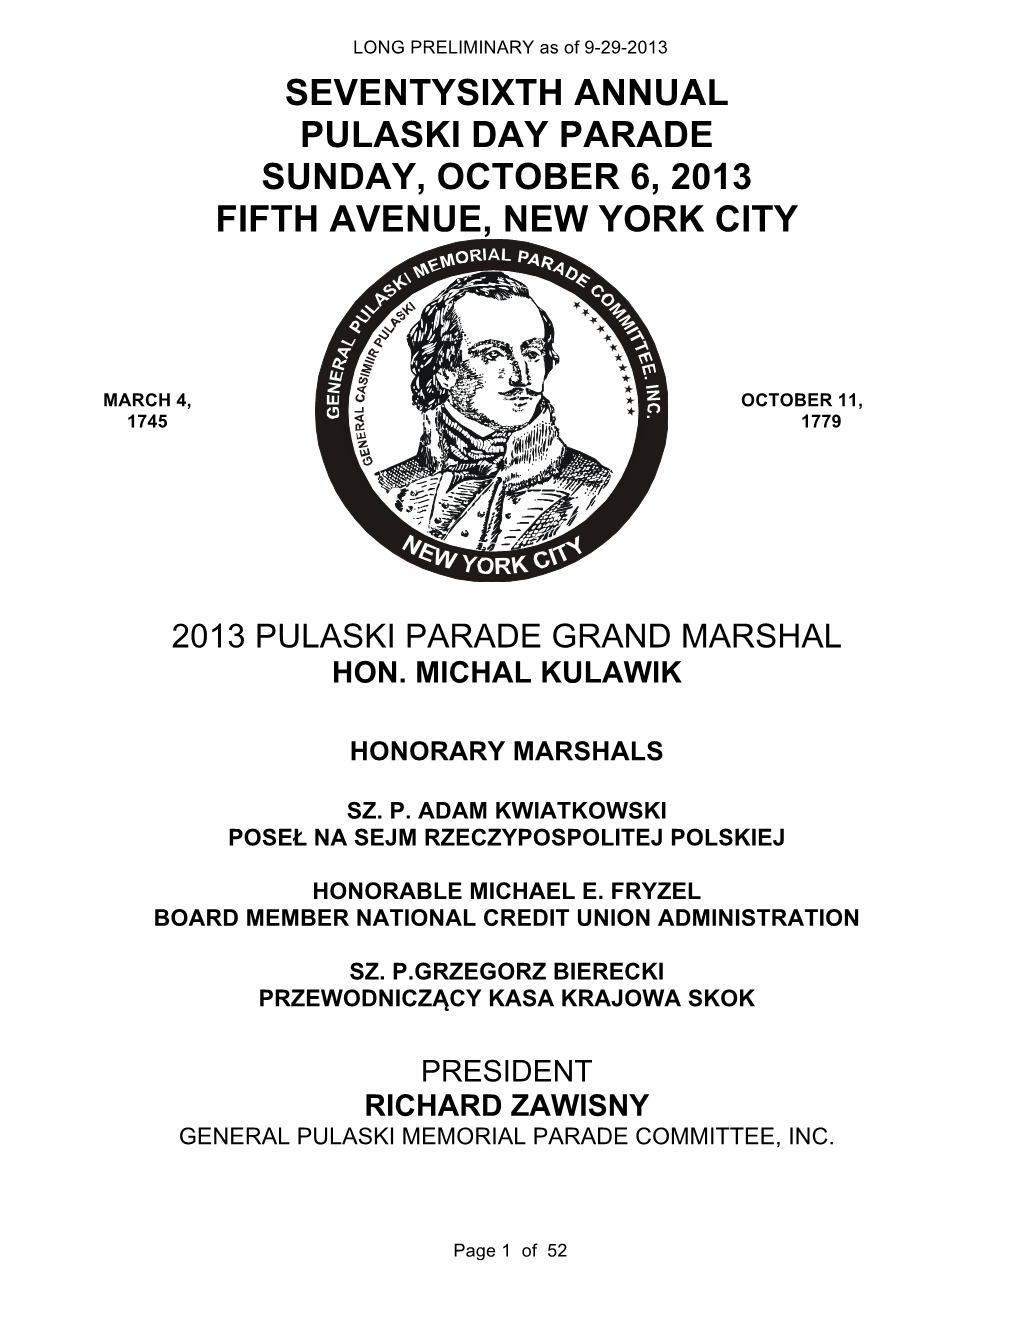 Seventysixth Annual Pulaski Day Parade Sunday, October 6, 2013 Fifth Avenue, New York City